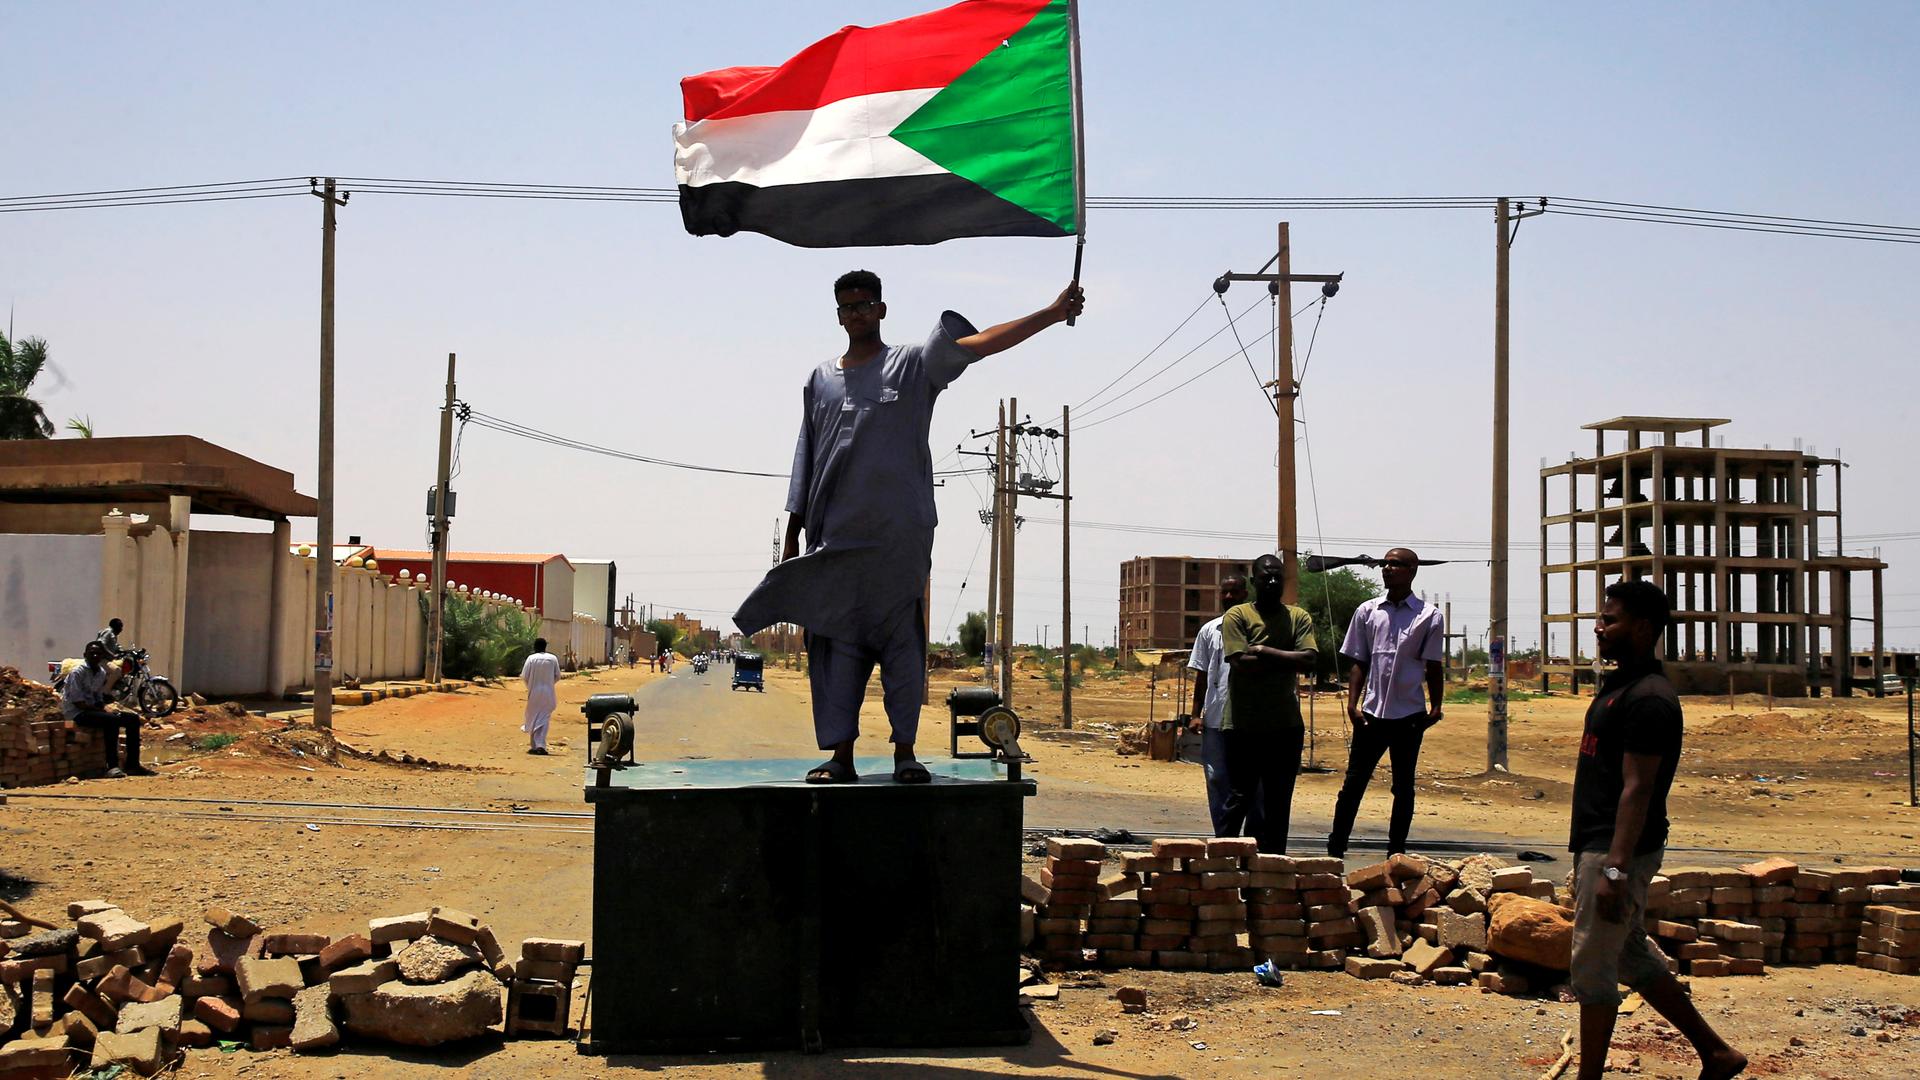 A man stands on platform holding a Sudanese flag.